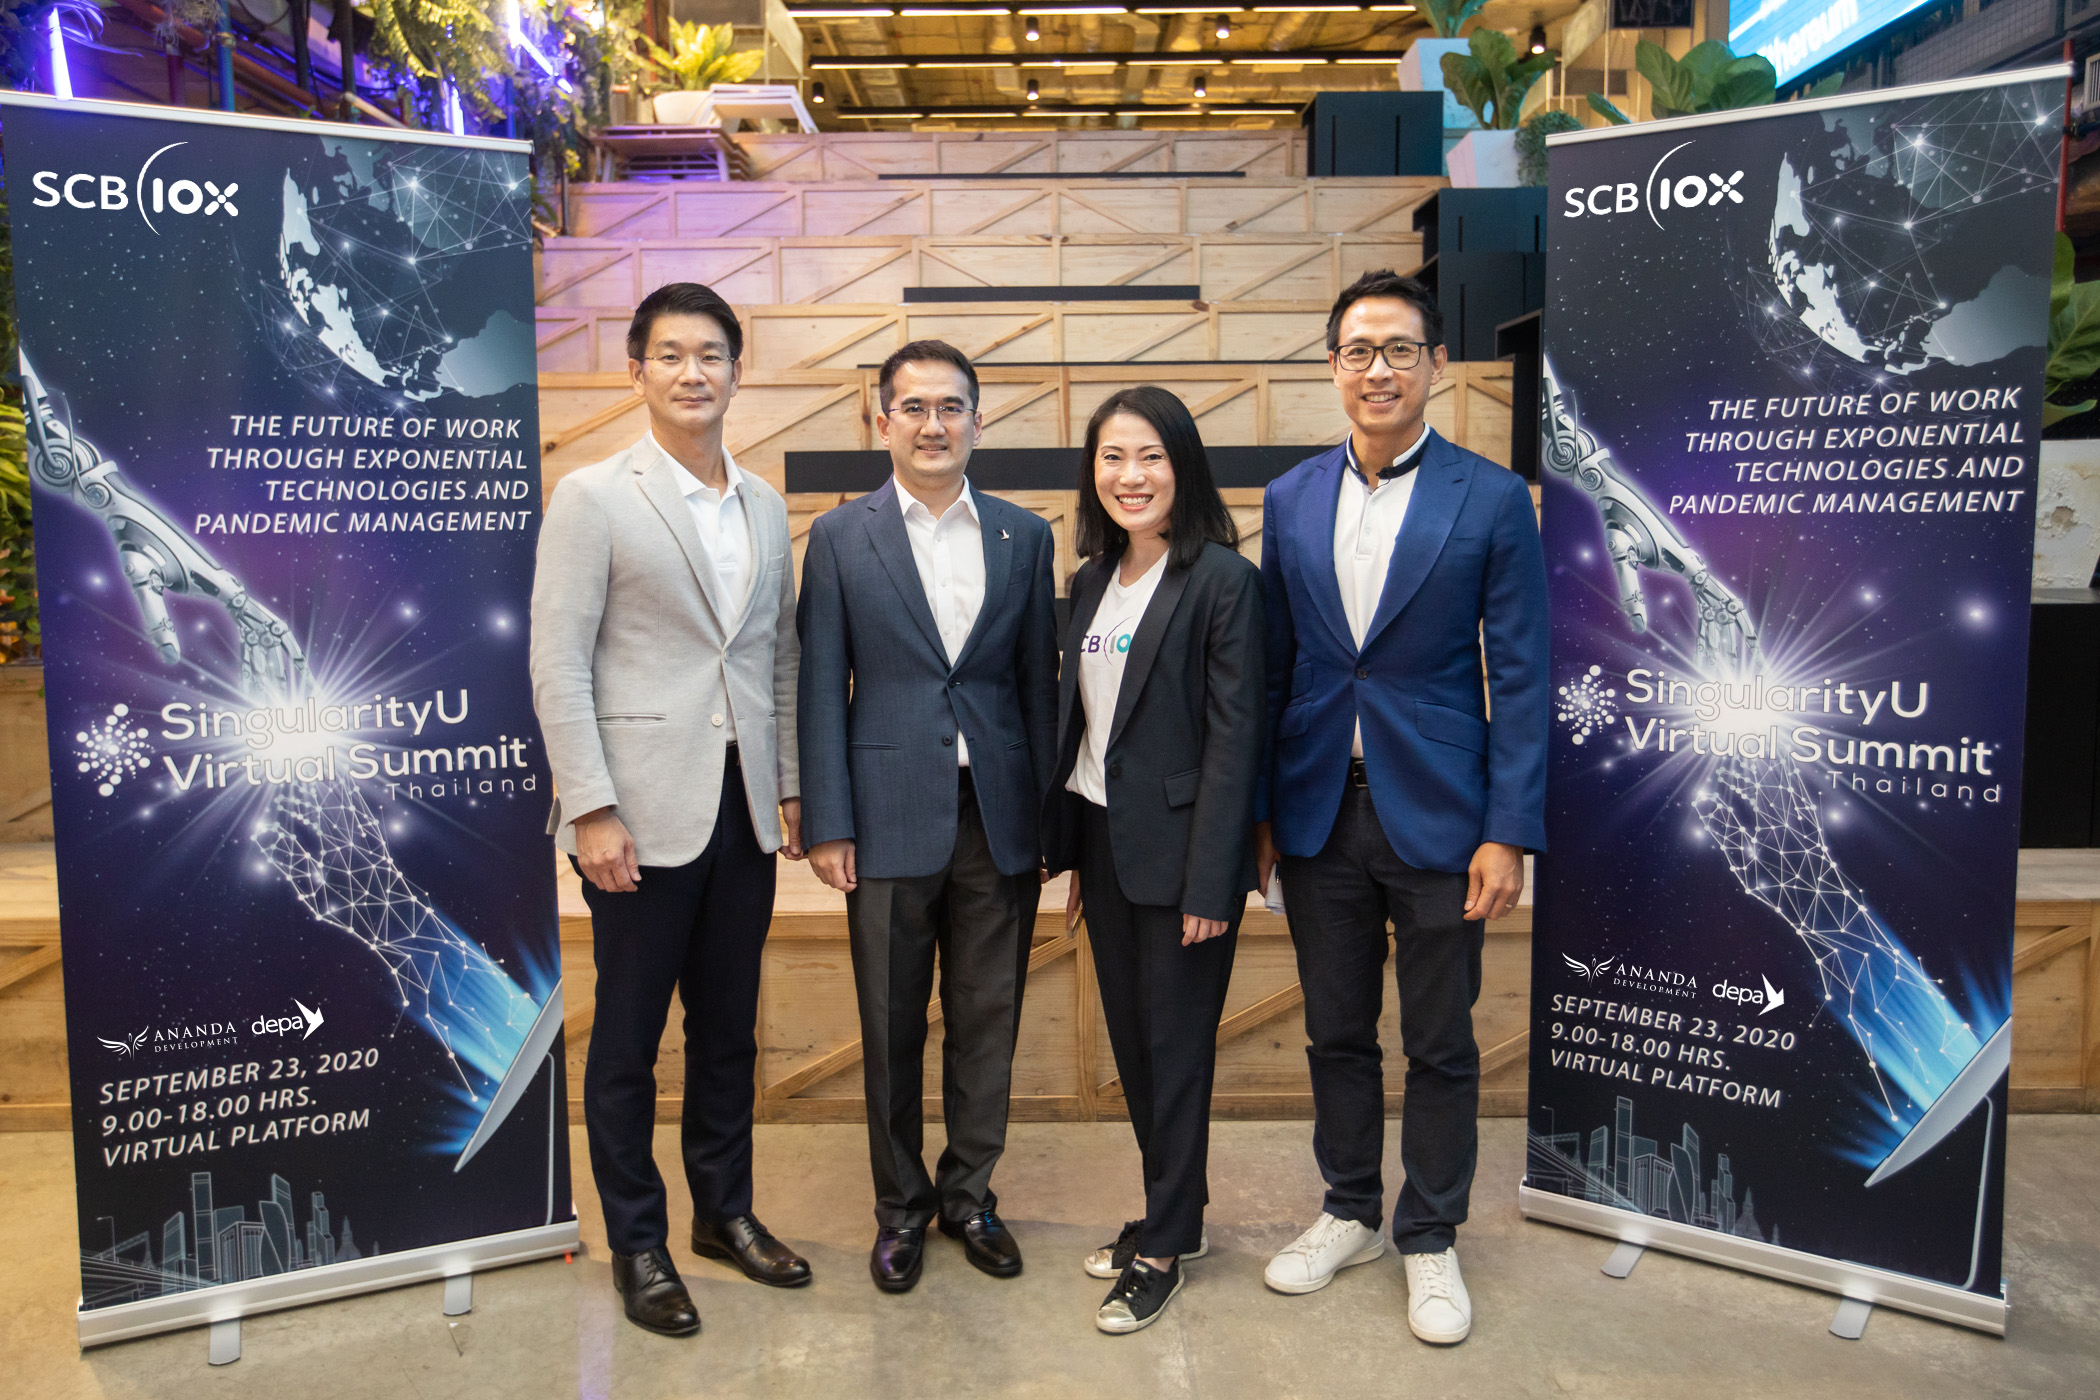 SingularityU Thailand ร่วมกับ SCB10X และ depa จัดงานพบปะผู้นำอุ่นเครื่อง งาน SingularityU Virtual Summit Thailand 2020 ที่จะจัดขึ้นในวันที่ 23 ก.ย.